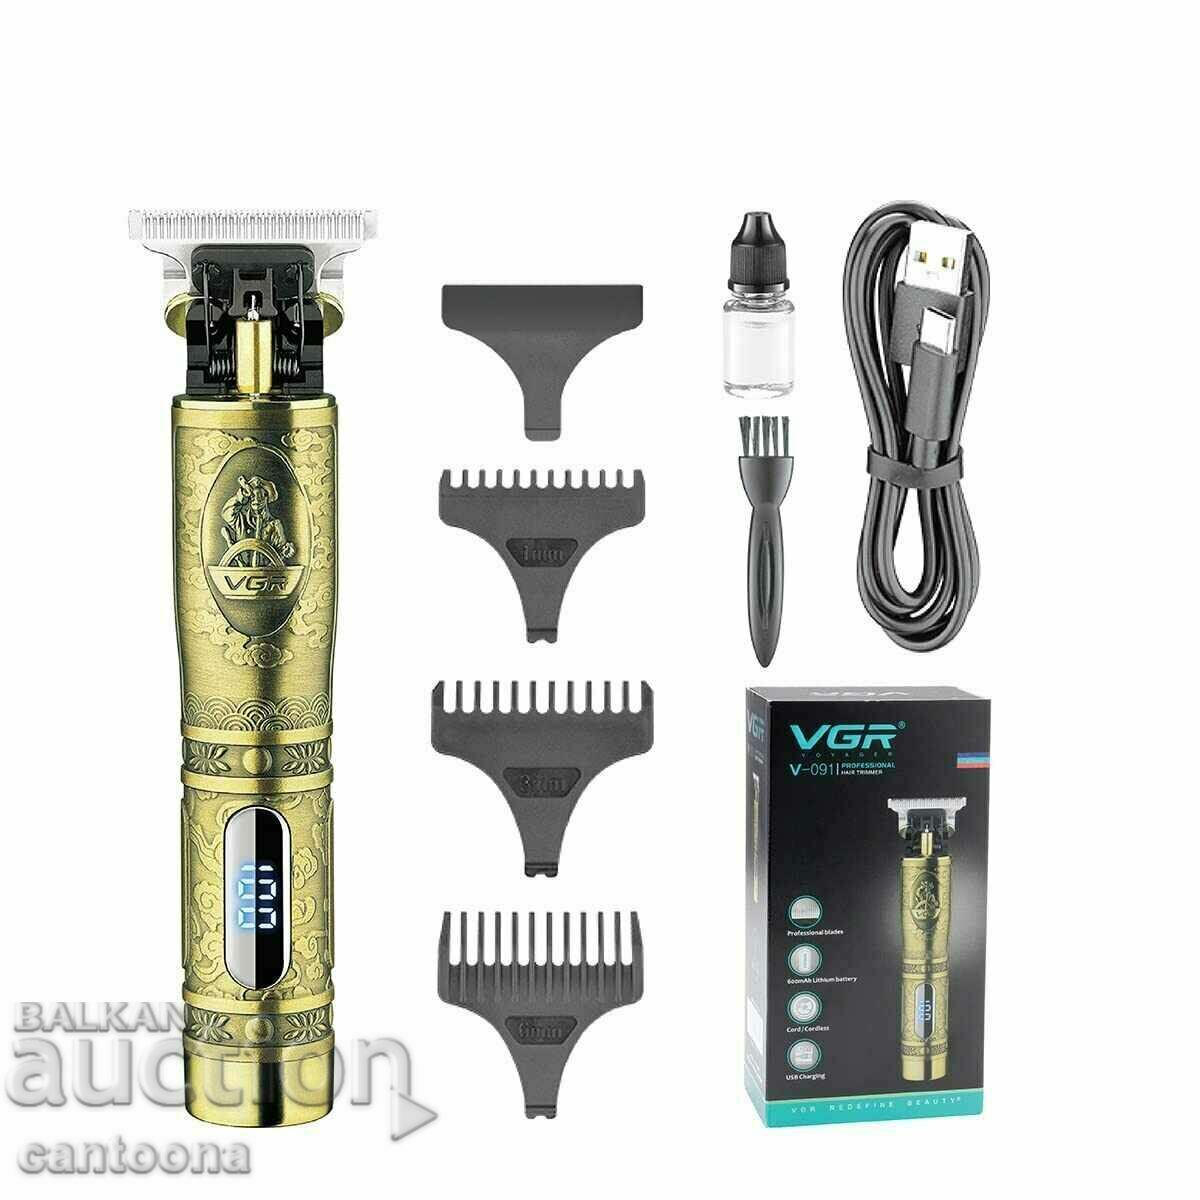 VGR V-091 cordless hair trimmer, metal blade, USB